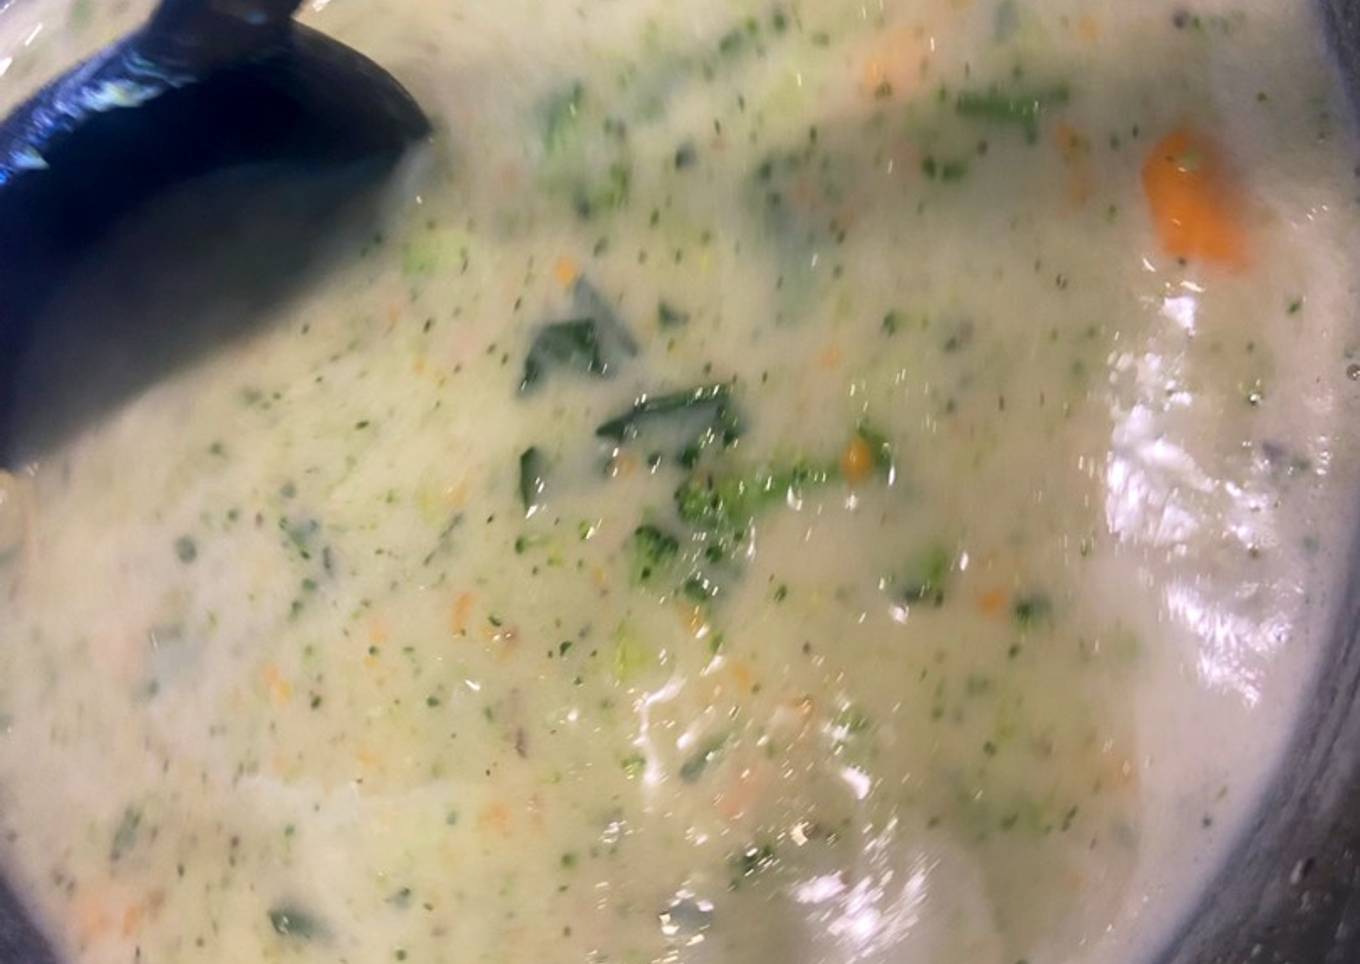 Creamy broccoli and cheddar soup